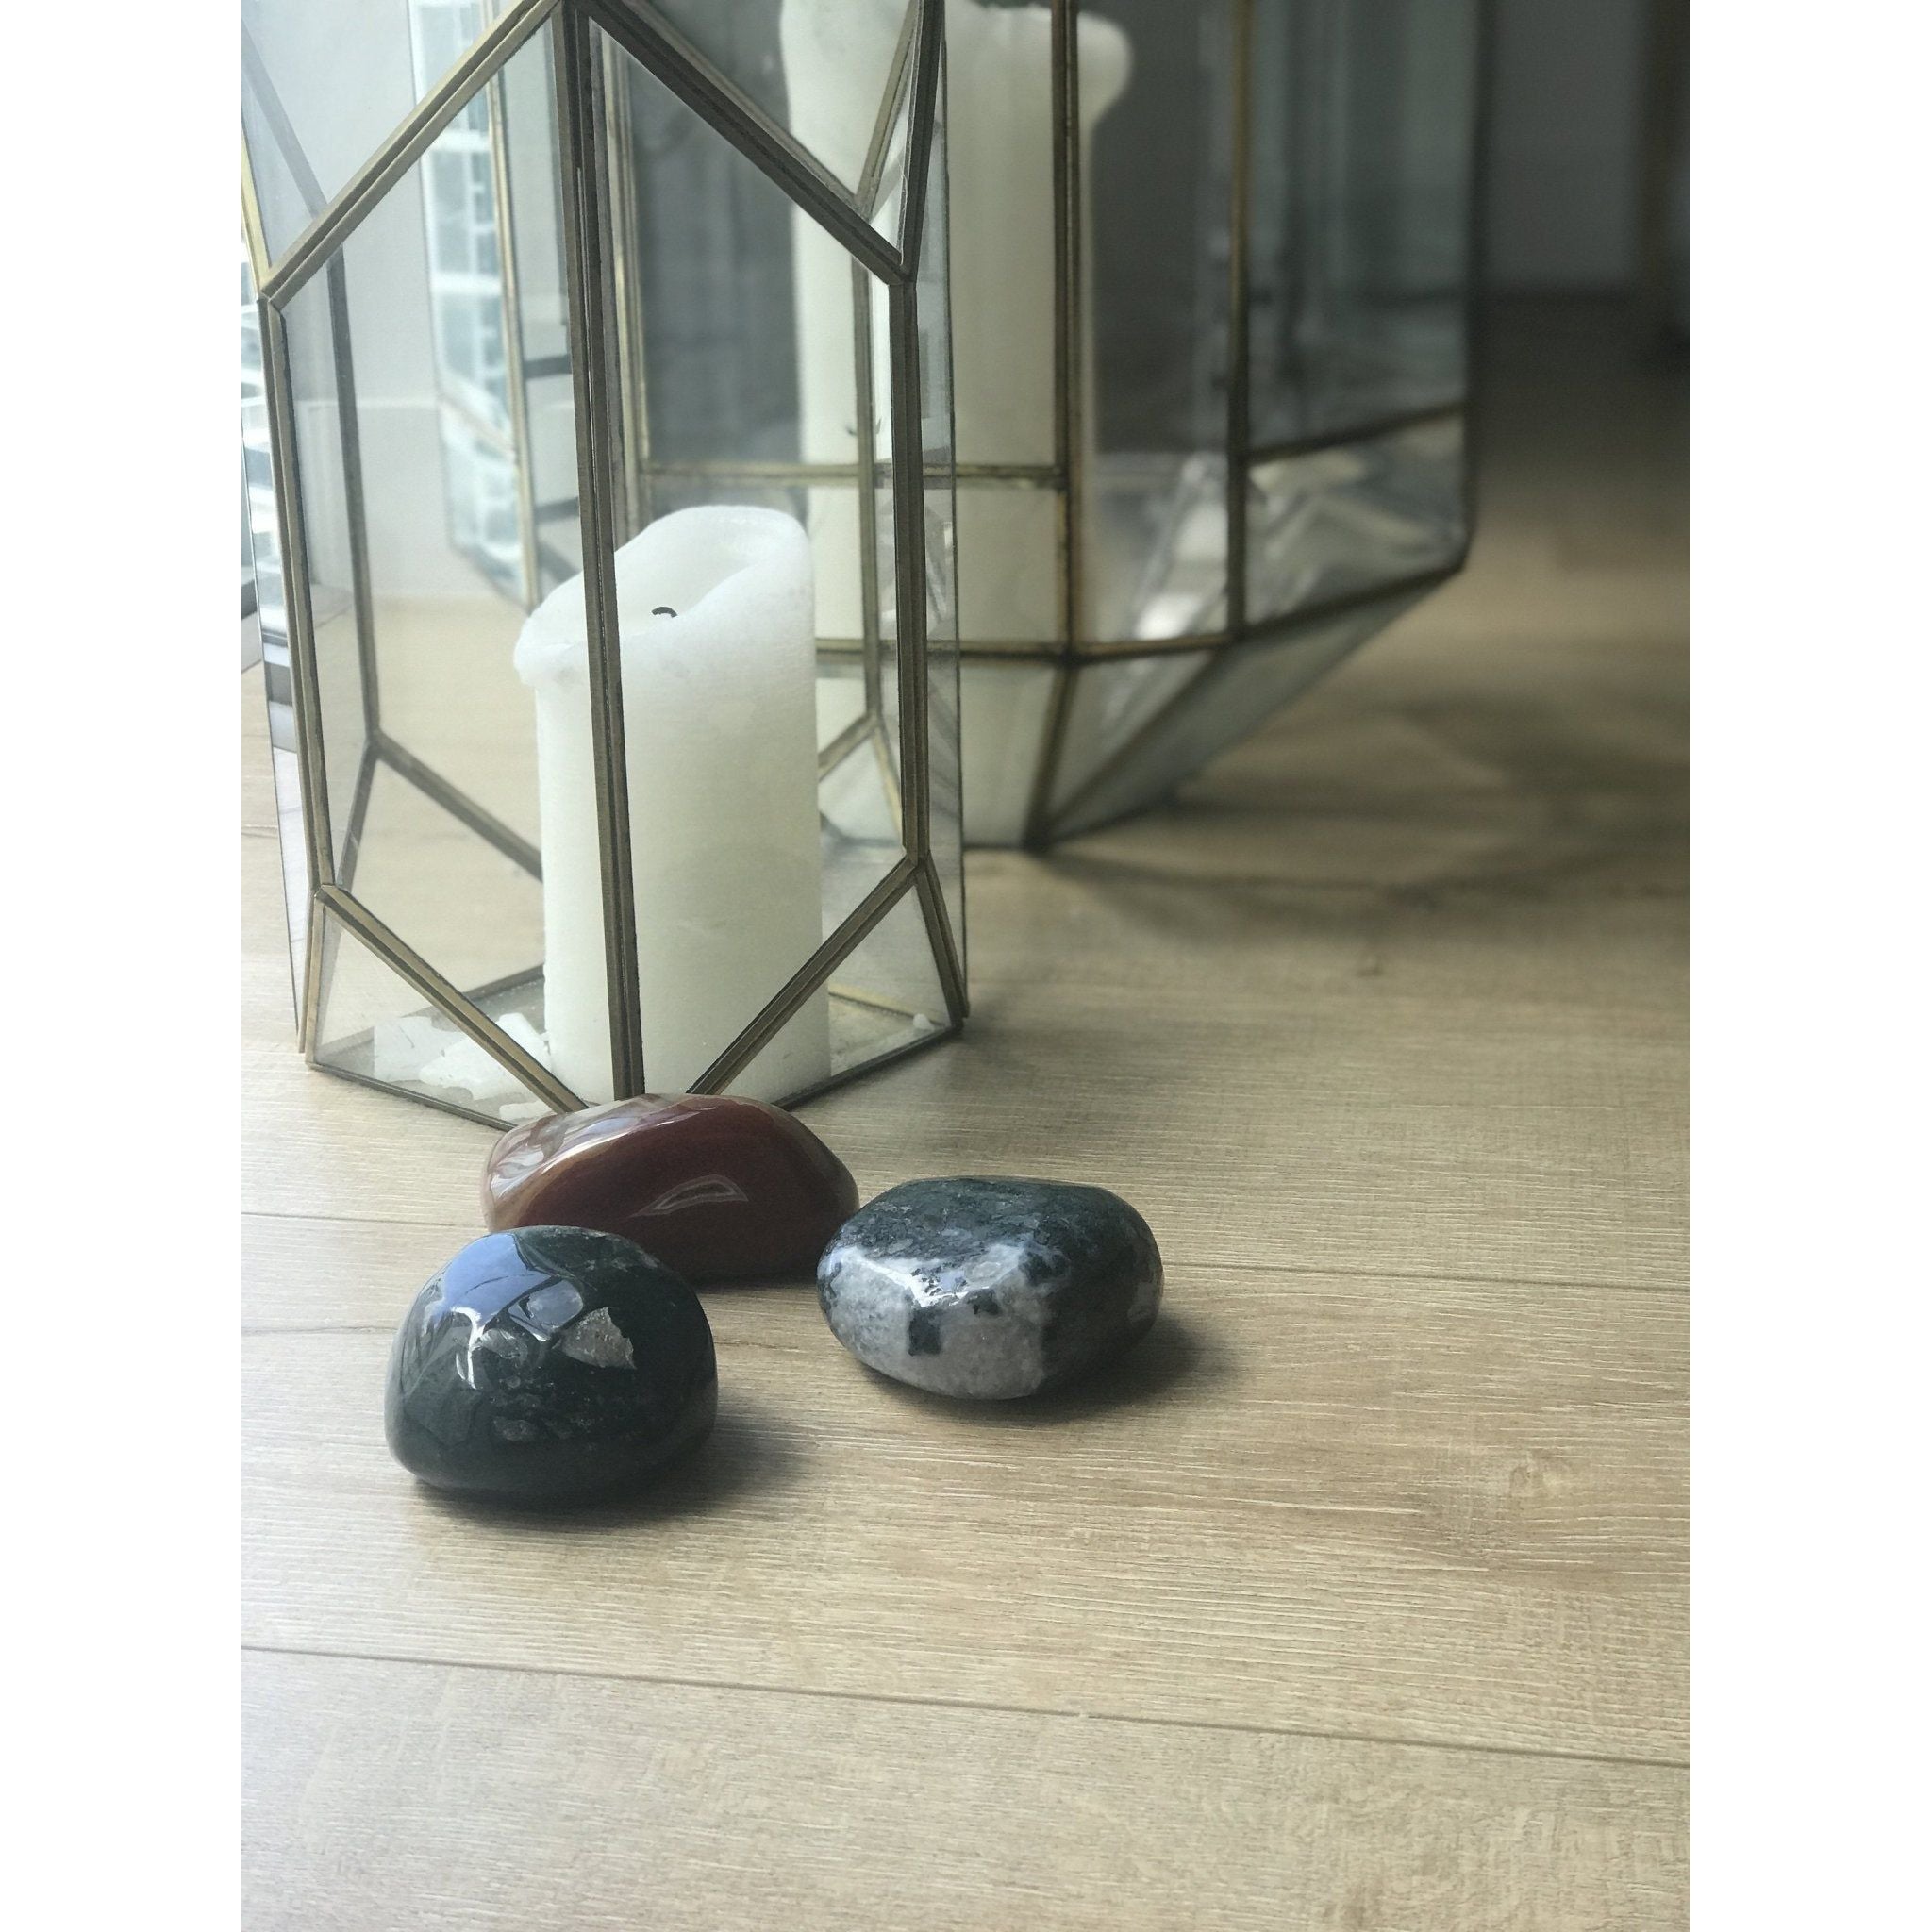 Natural Bloodstone Meditation Gemstone Crystal